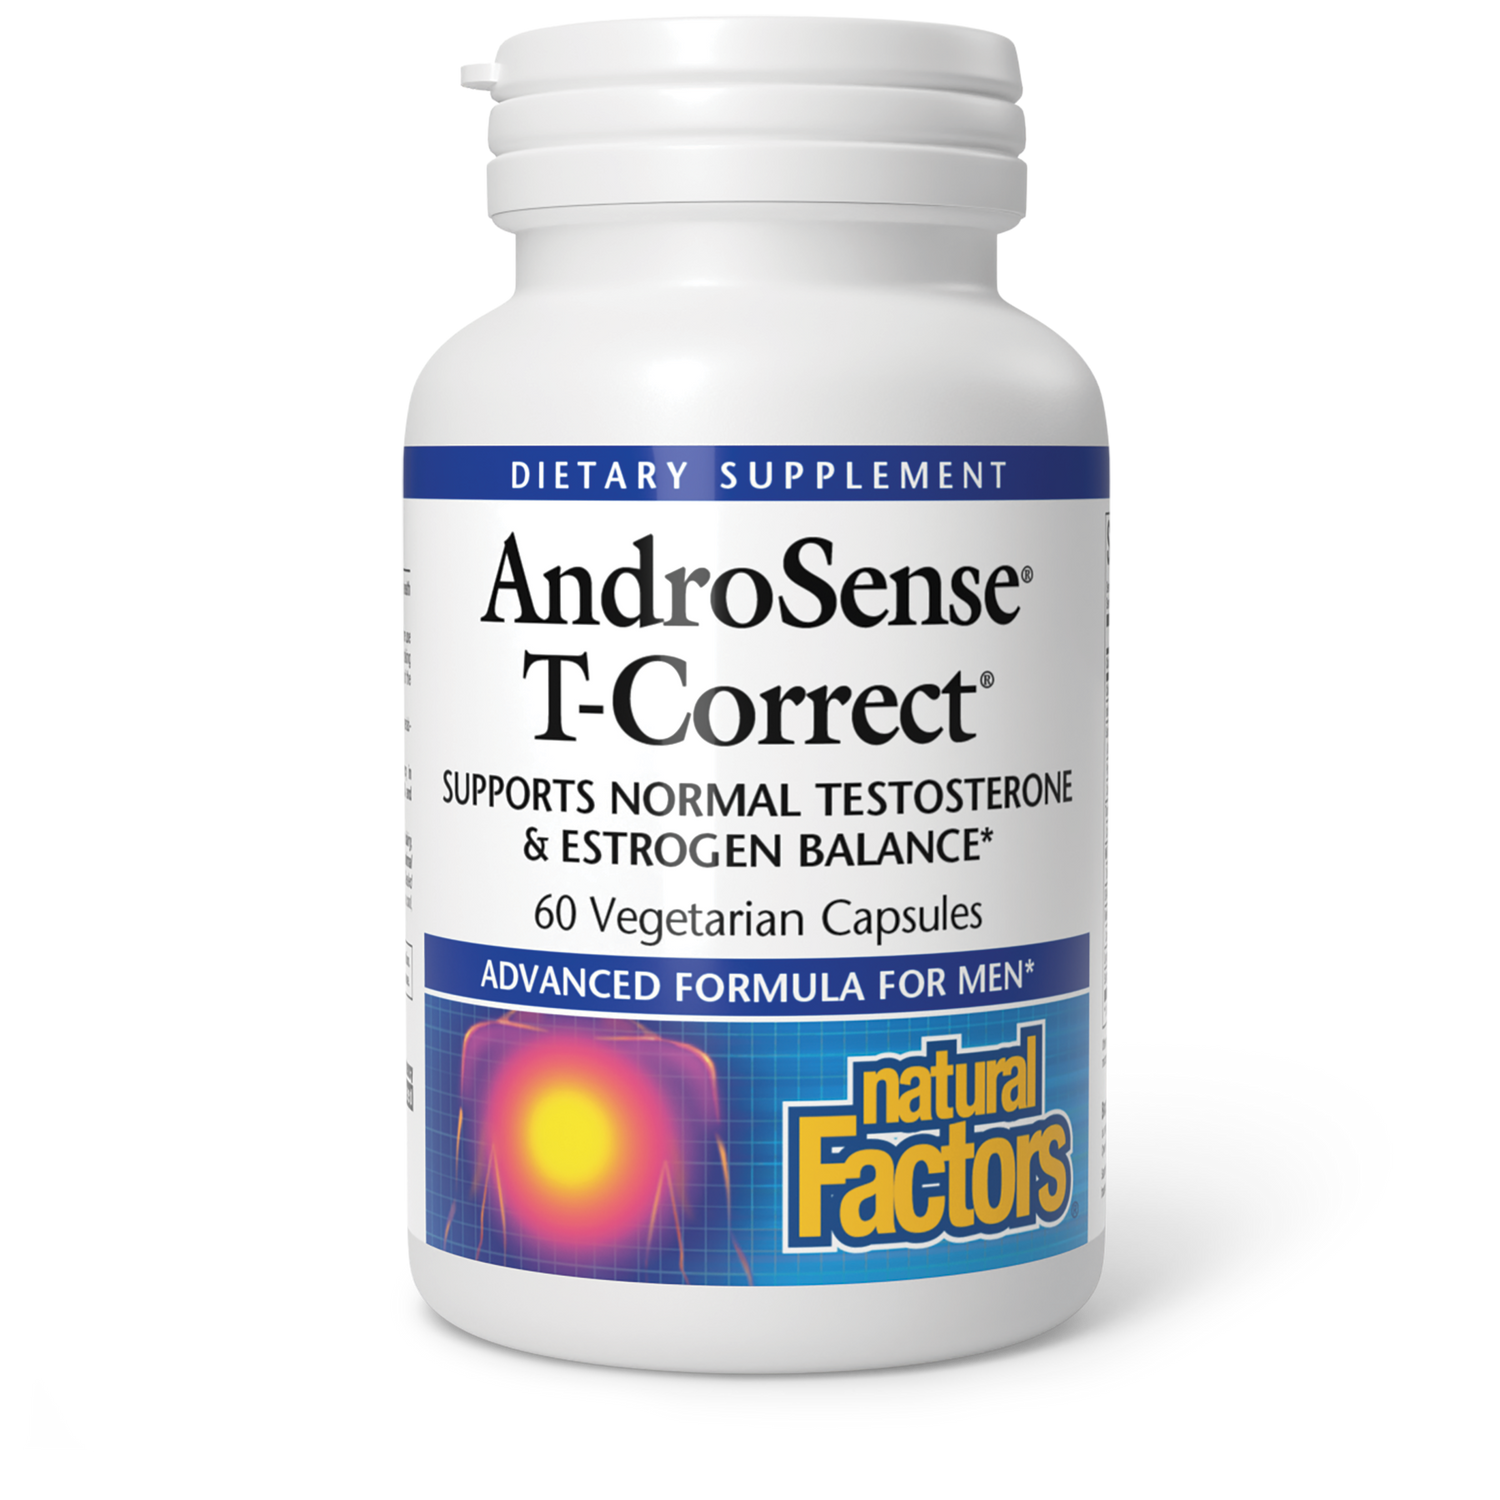 AndroSense® T-Correct®|variant|hi-res|3513U